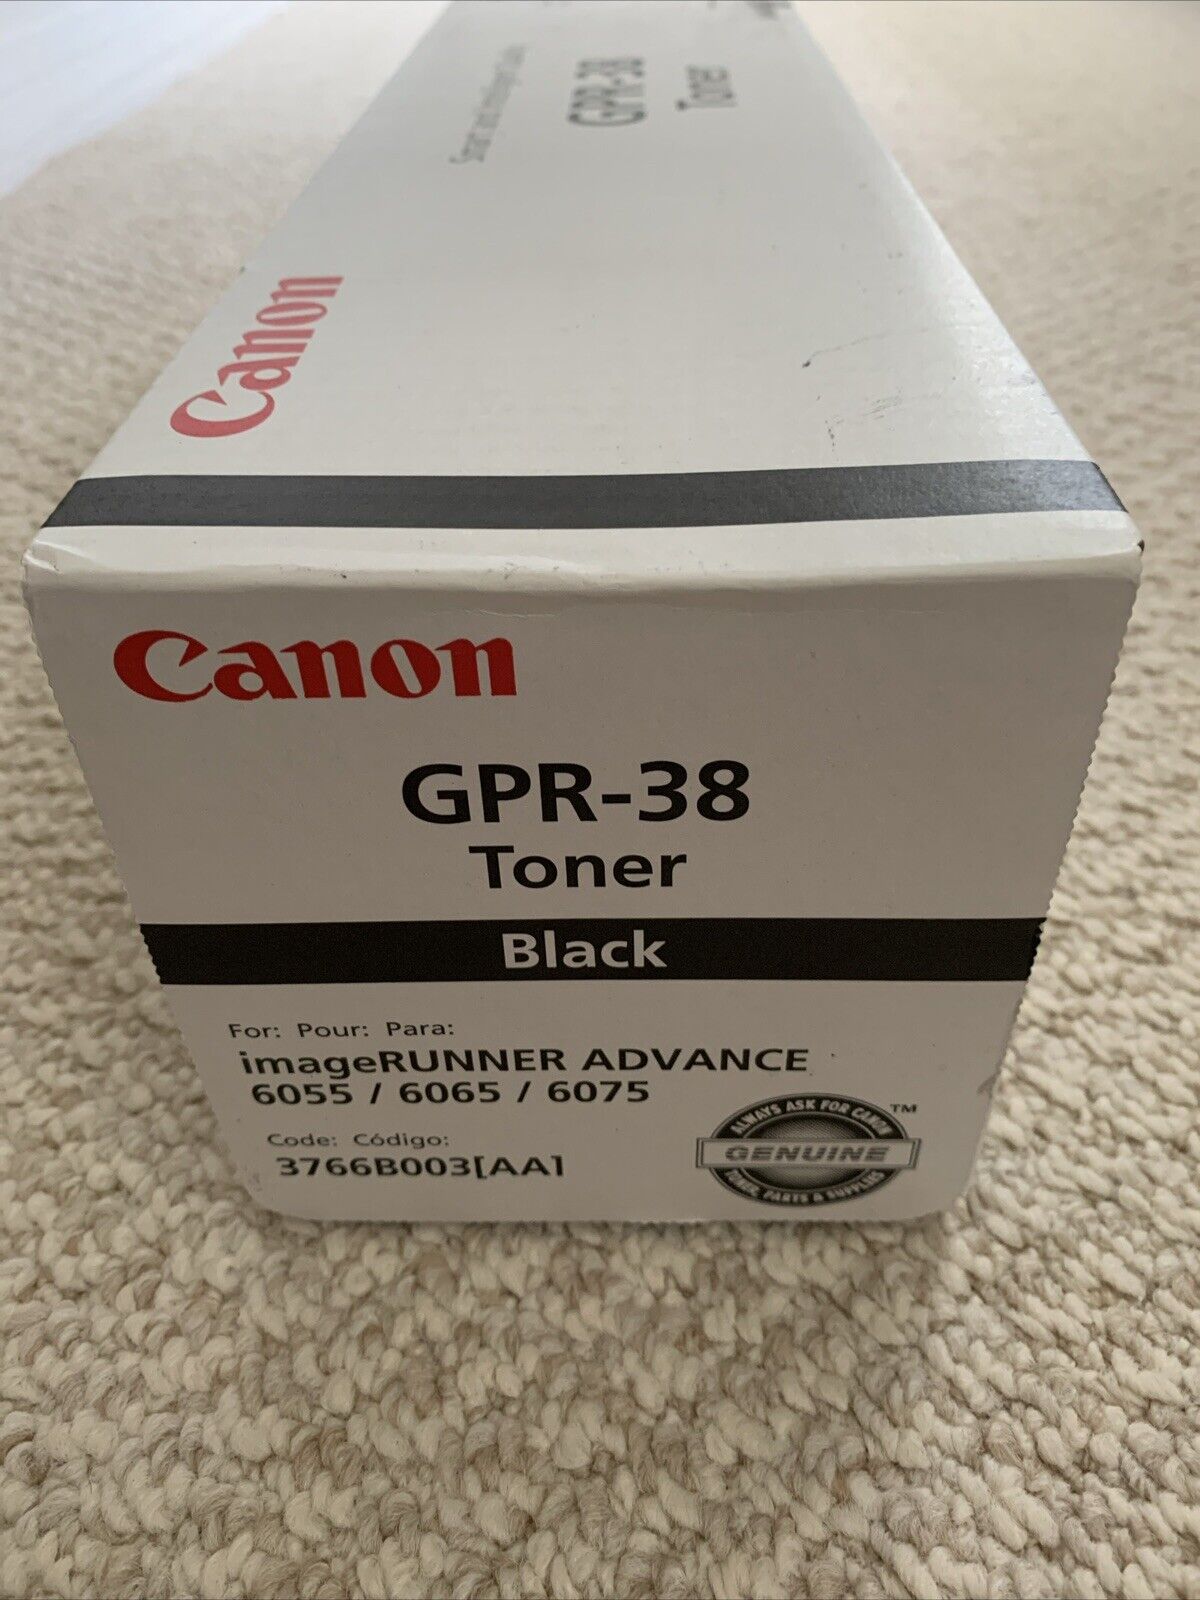 Genuine Canon GPR-38 Toner 3766B003AA ImageRunner Advance  Brand New Sealed